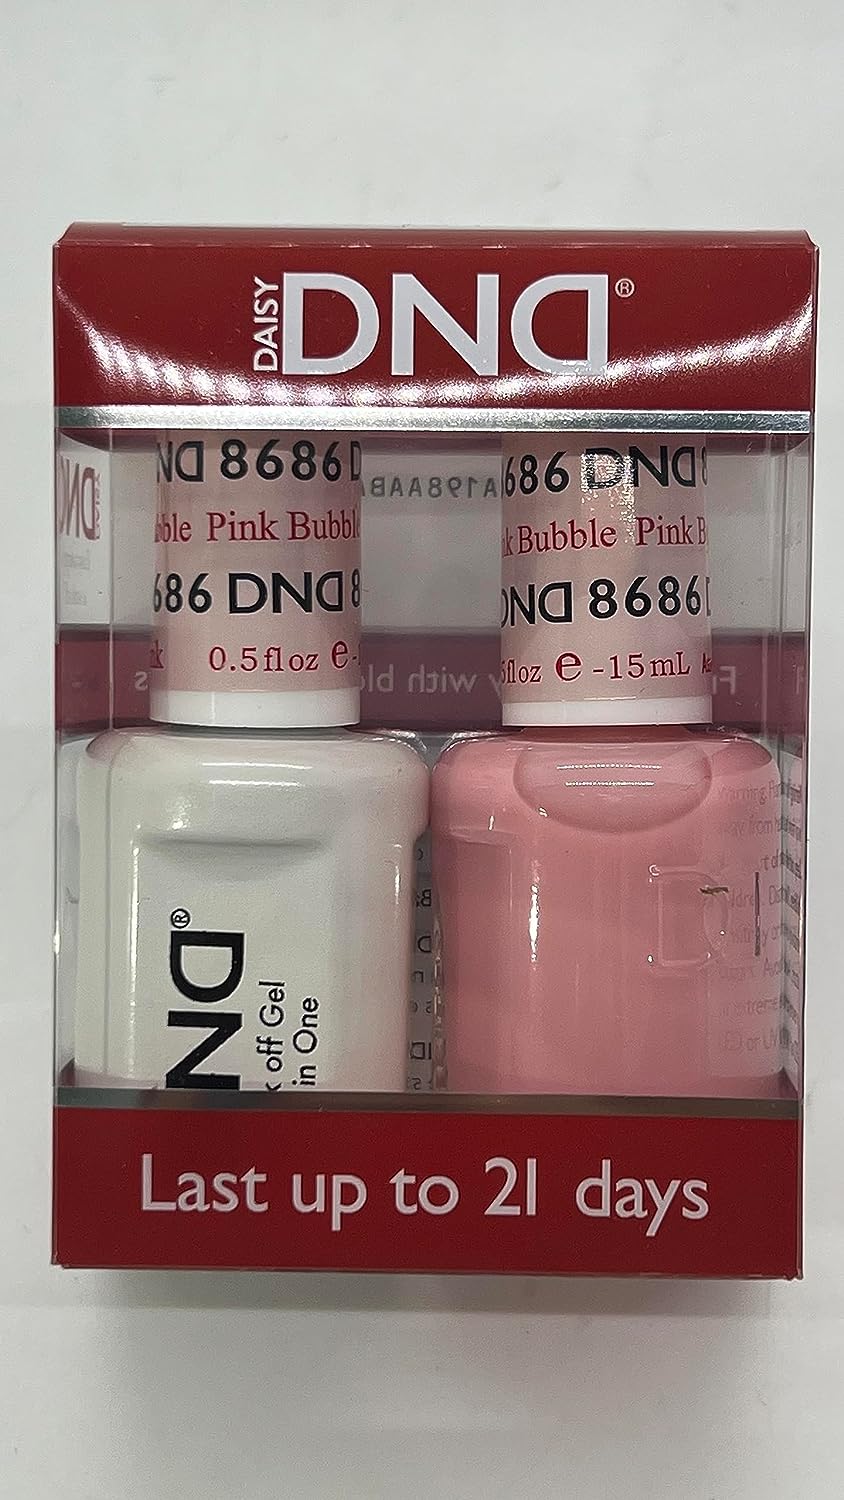 DND Matching Soak off Gel + Nail Polish - Bubble Pink #8686